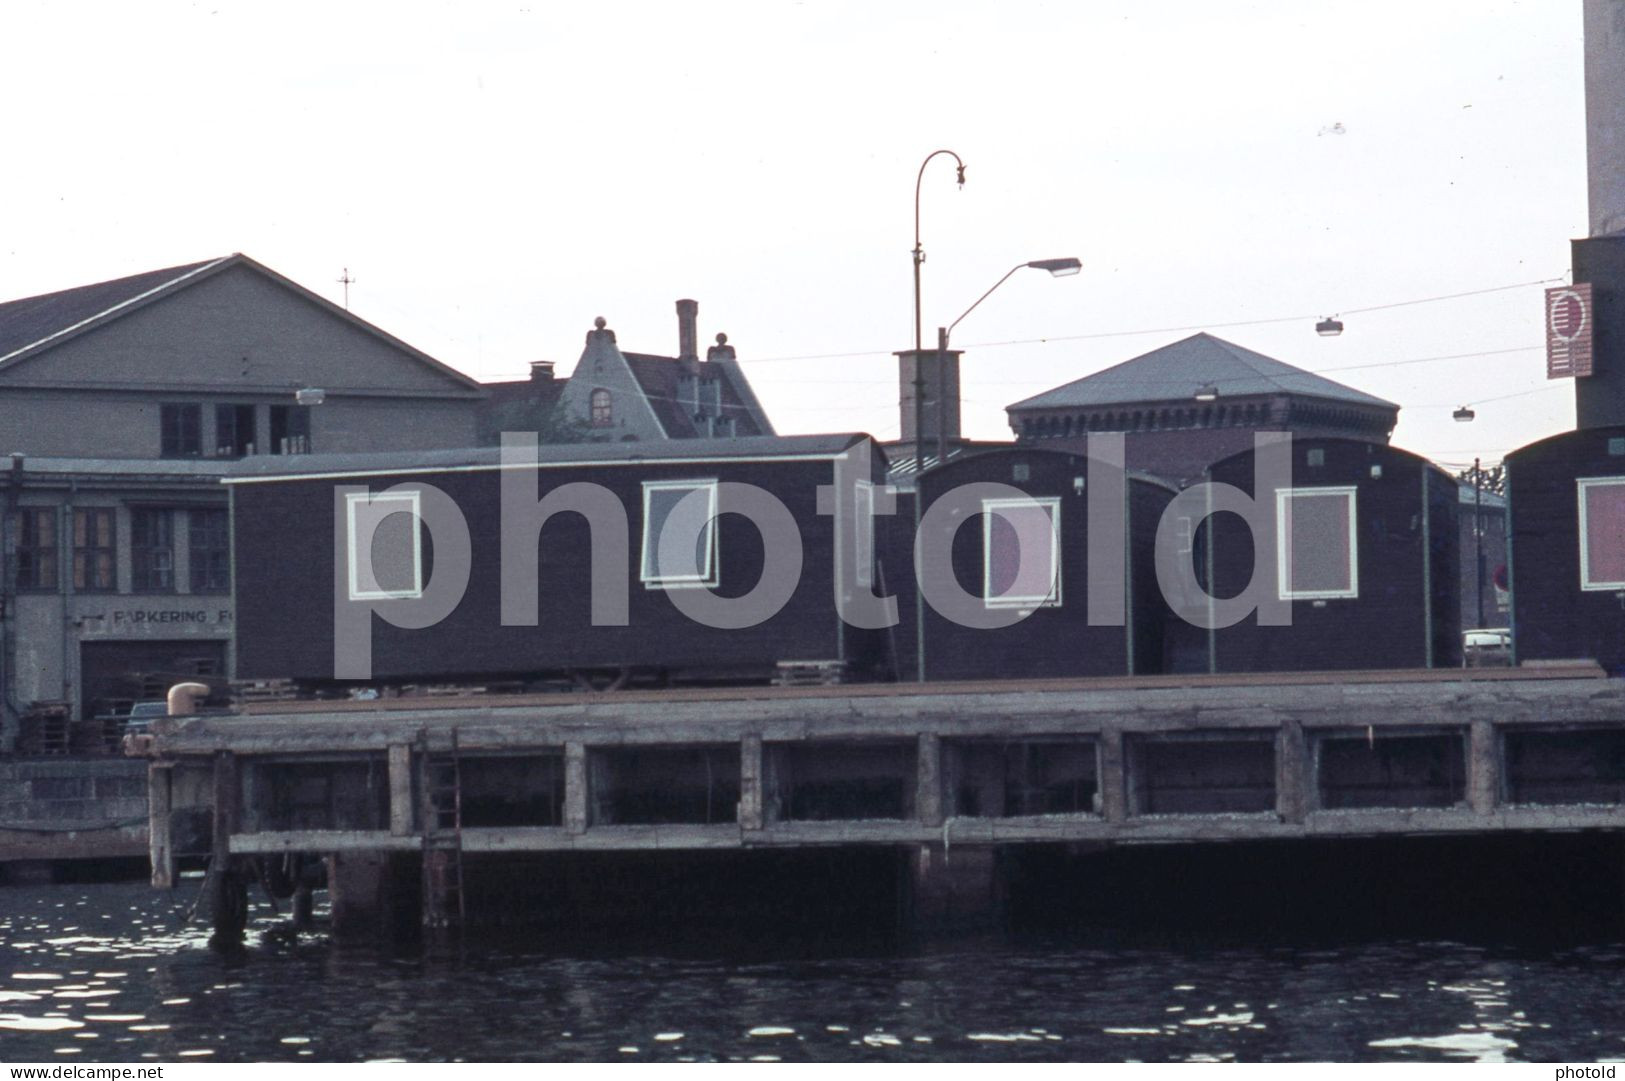 6 SLIDES SET 1977 OSLO NORWAY FJORDER NORGE AMATEUR 35mm SLIDE PHOTO 35mm DIAPOSITIVE SLIDE Not PHOTO No FOTO NB4161 - Diapositives